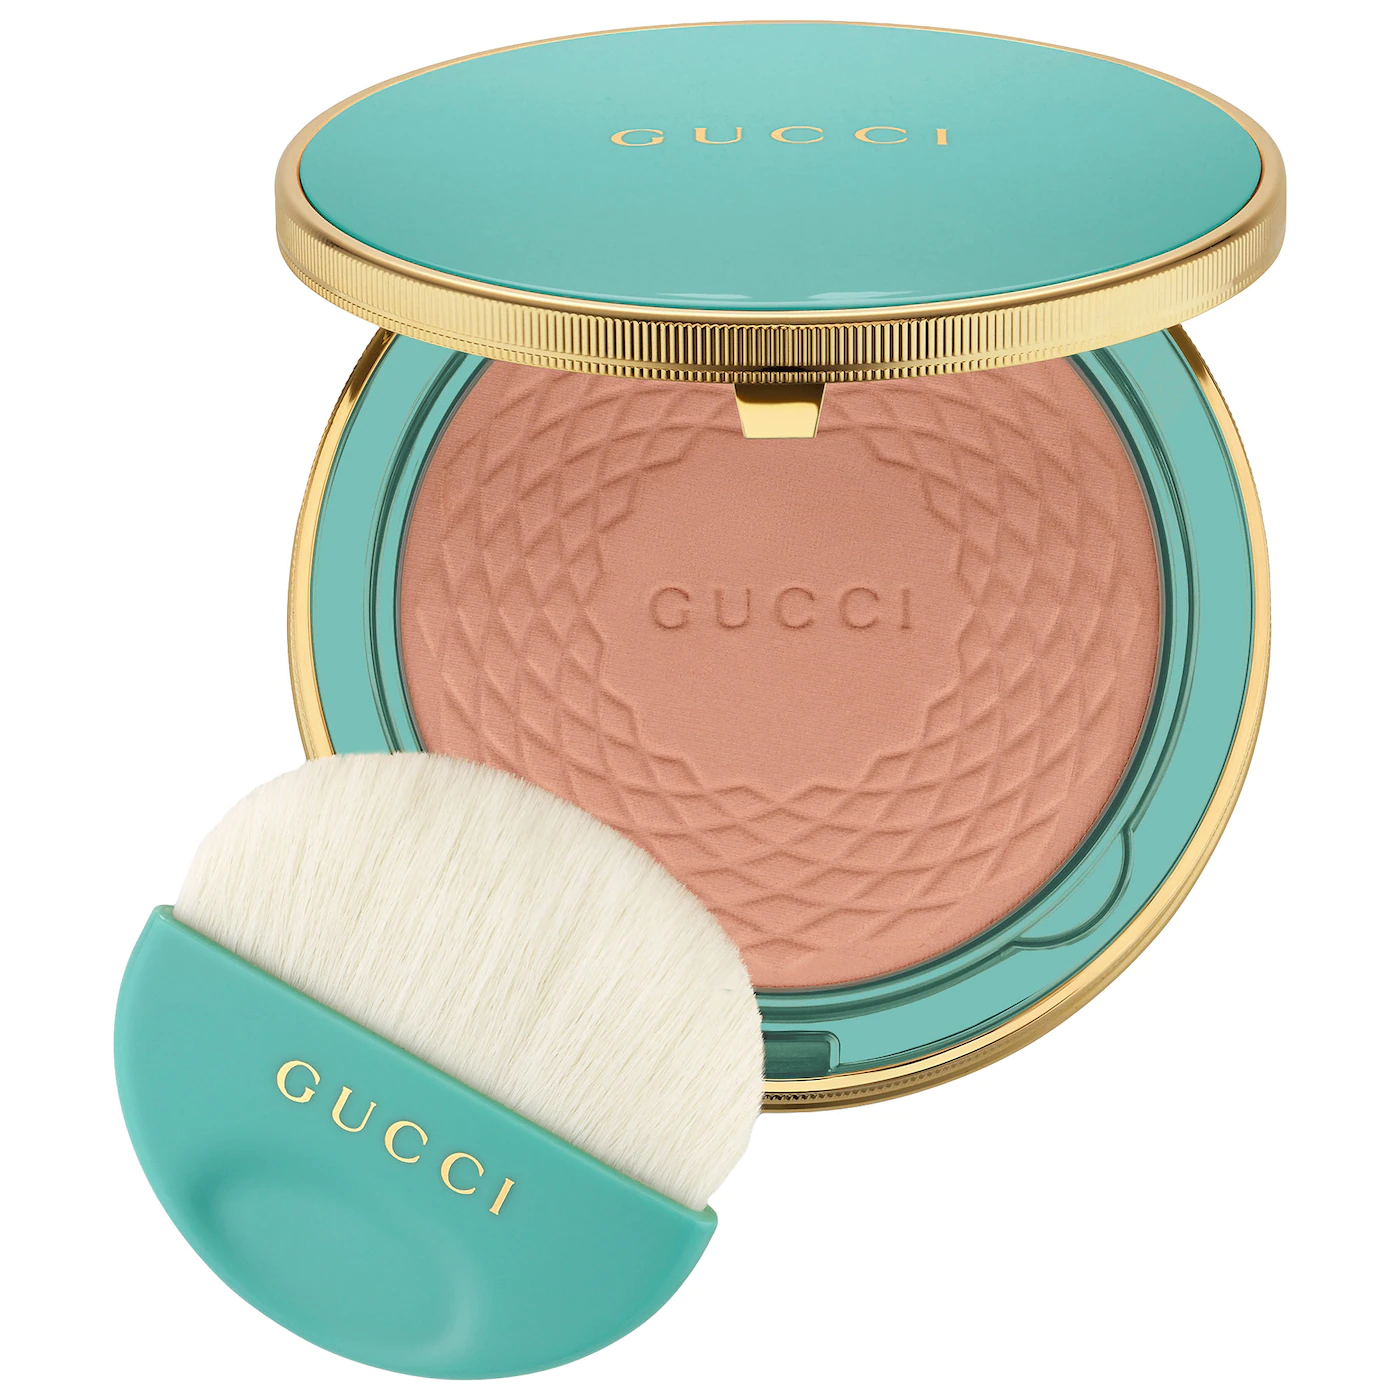 Gucci Soleil Bronzer - makeup - tint - beauty - Sephora